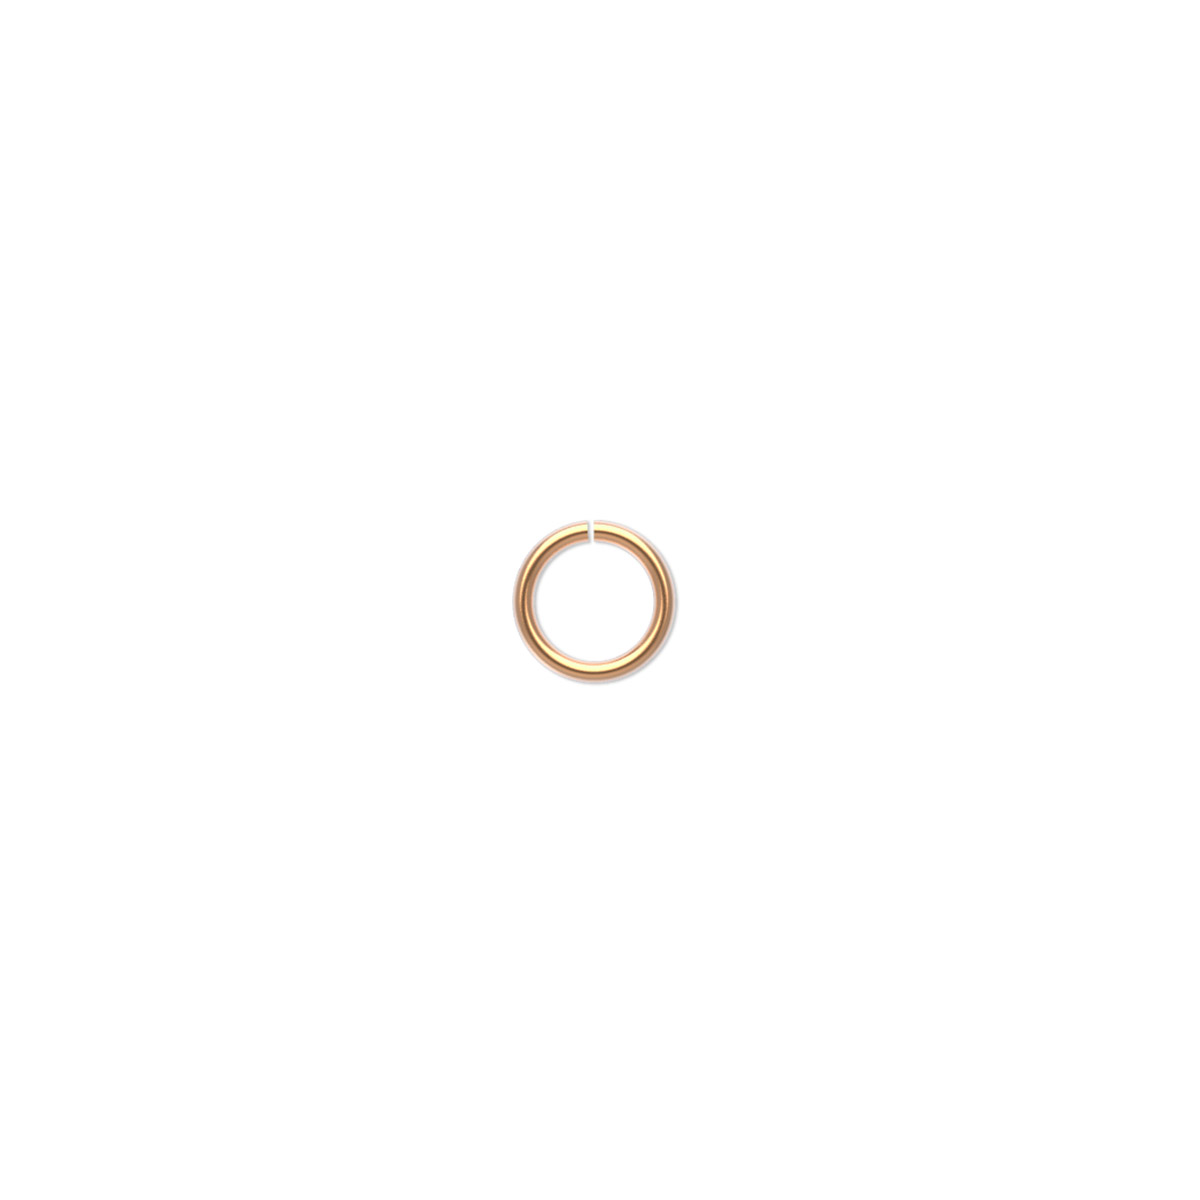 Jump ring, gold-plated brass, 6mm round, 4.4mm inside diameter, 20 ...